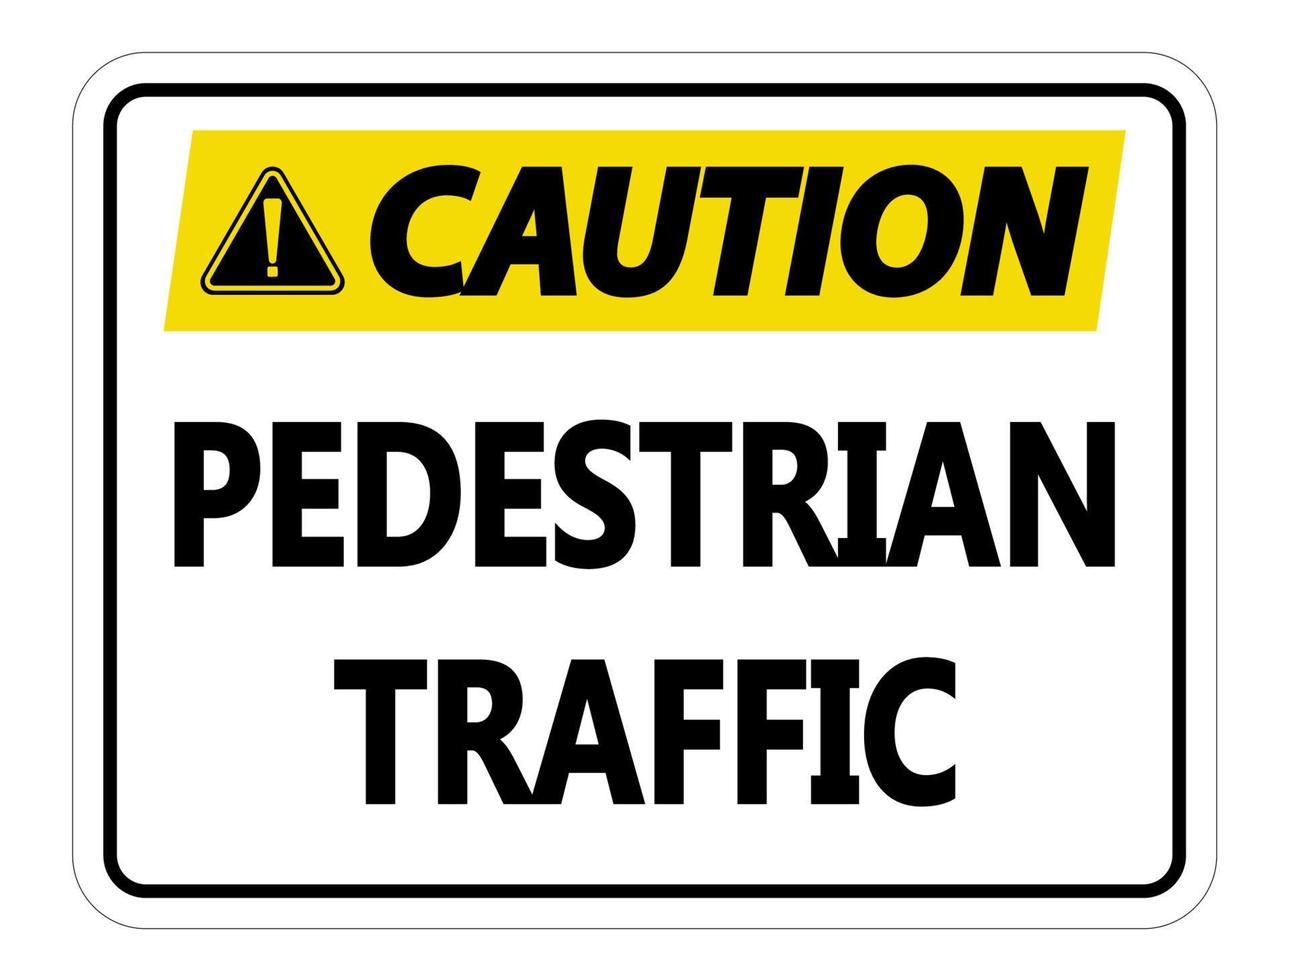 Precaución señal de tráfico peatonal sobre fondo blanco. vector